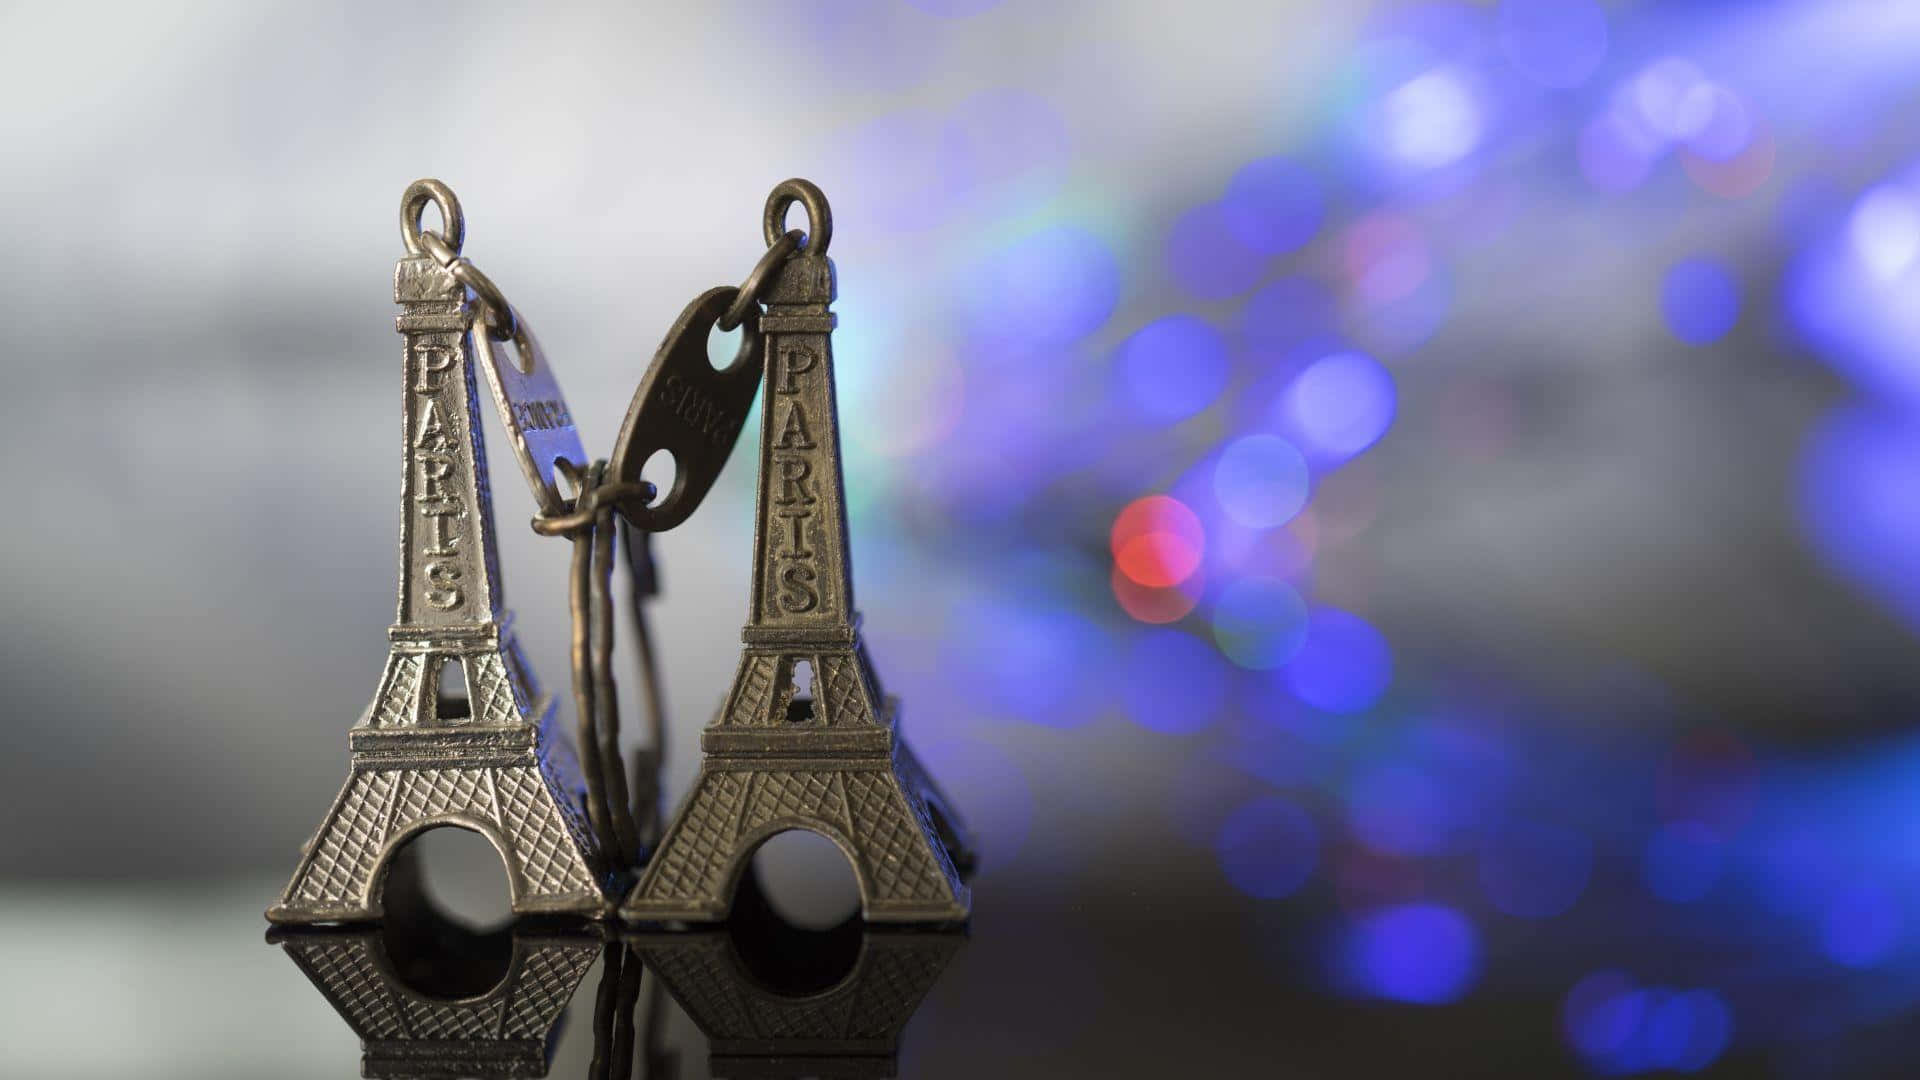 The Eiffel Tower lights up the Paris Sky